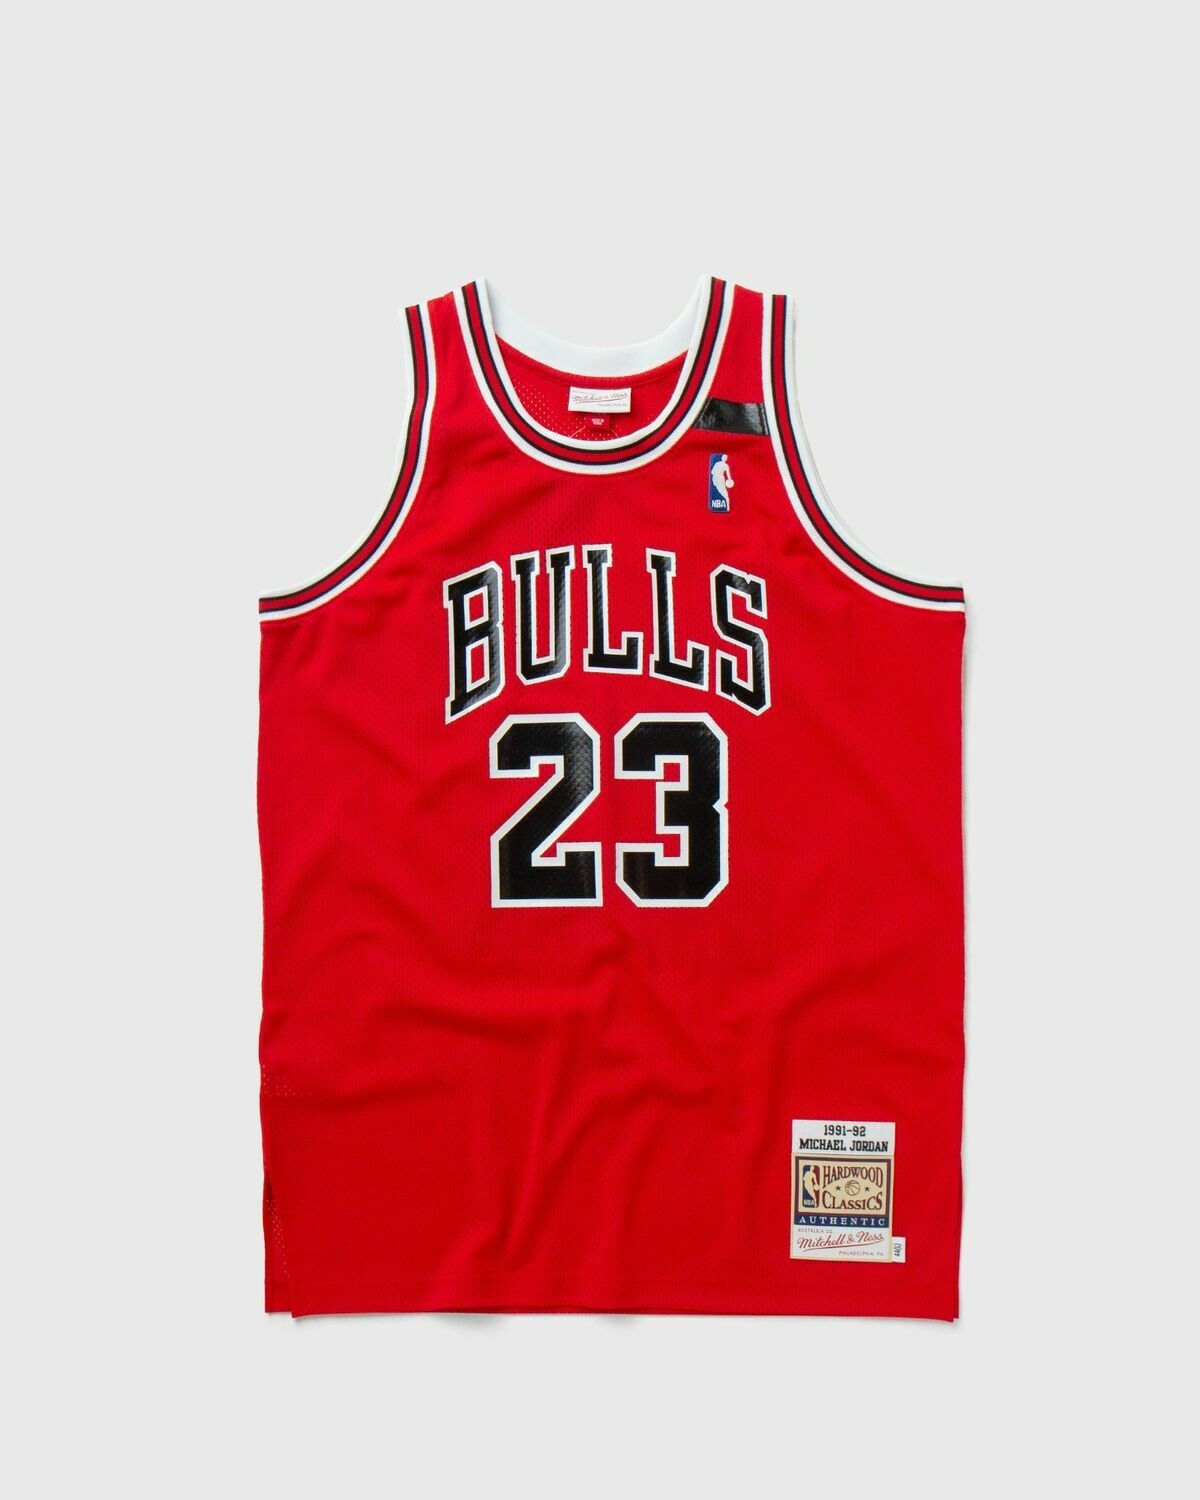 Mitchell & Ness Nba Authentic Jersey Chicago Bulls 1991 92 Michael Jordan #23 Red - Mens - Jerseys